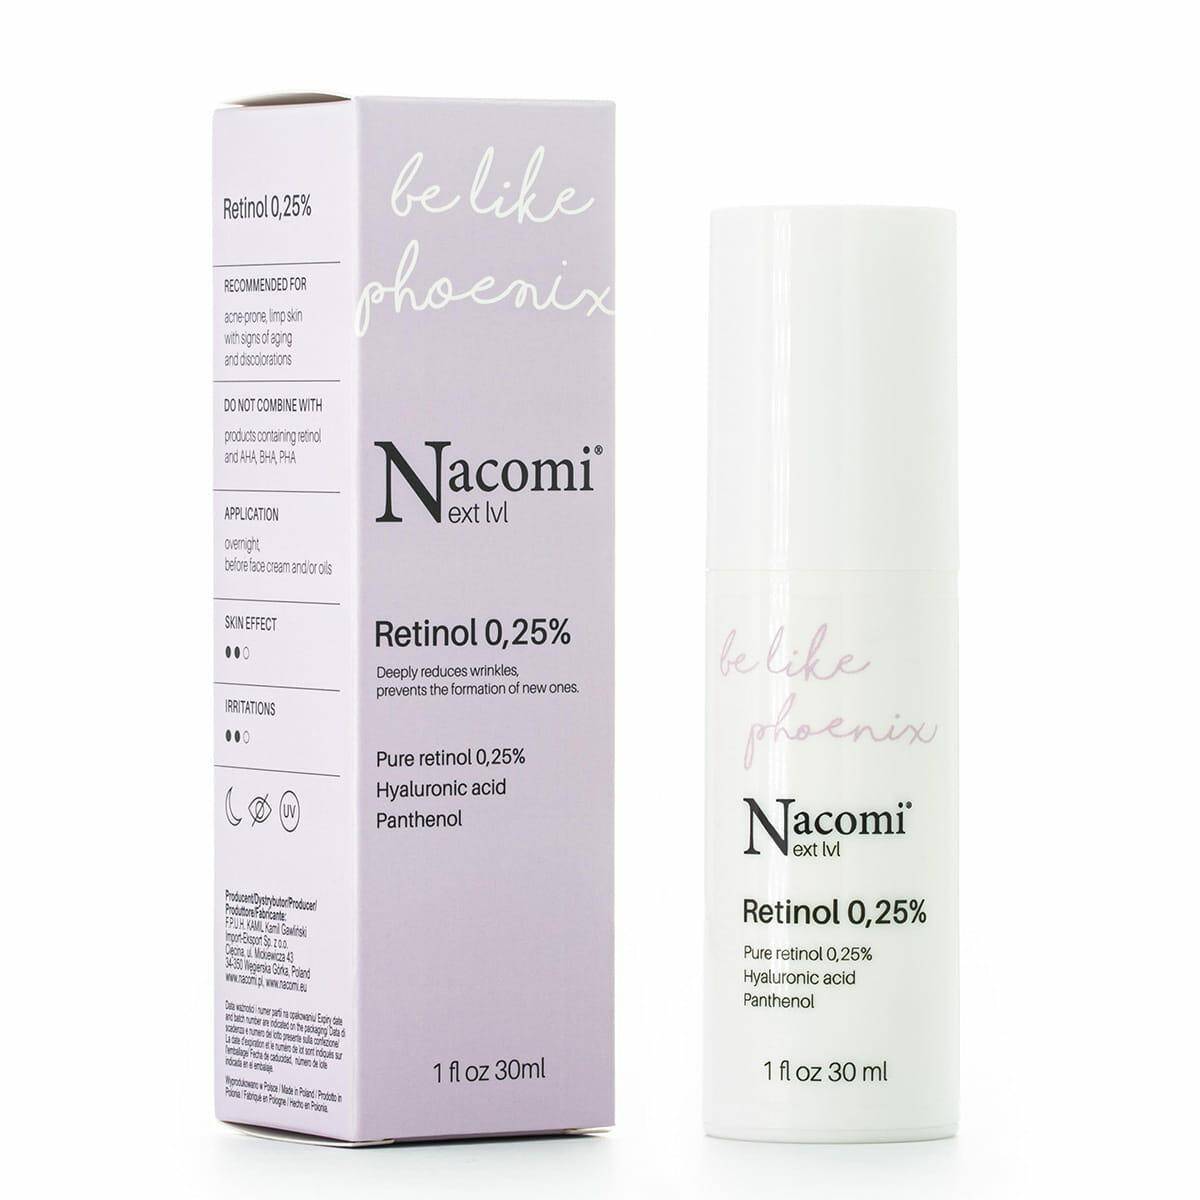 Nacomi next lvl serum Retinol 0,25% 30ml